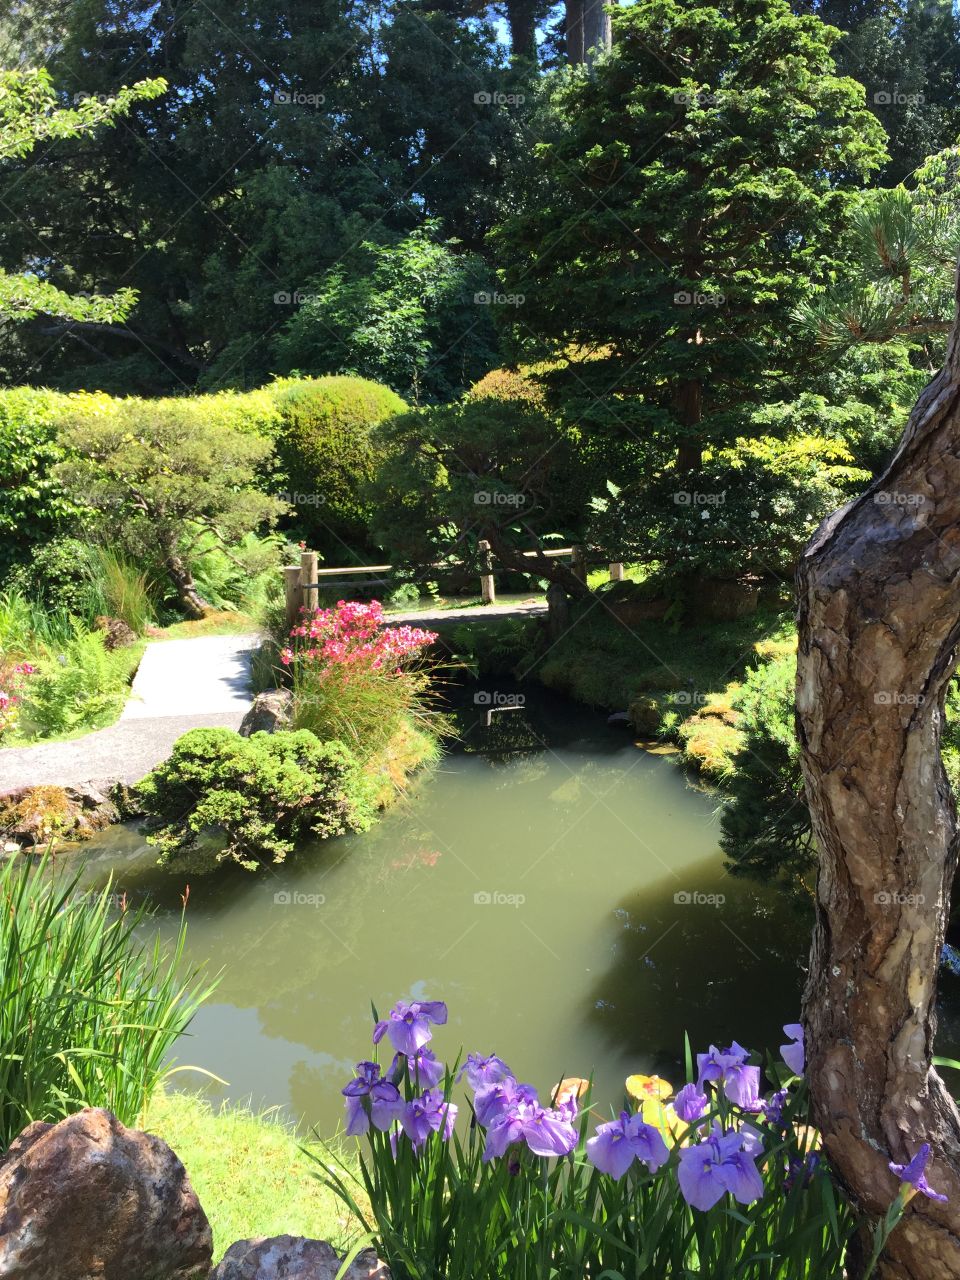 Japanese Garden, San Francisco, SF, Urban Garden, Tree, Greens, Stream, Rocks, Relaxing, Inviting, Meditation, Lively and Peaceful, California, CA, Pond